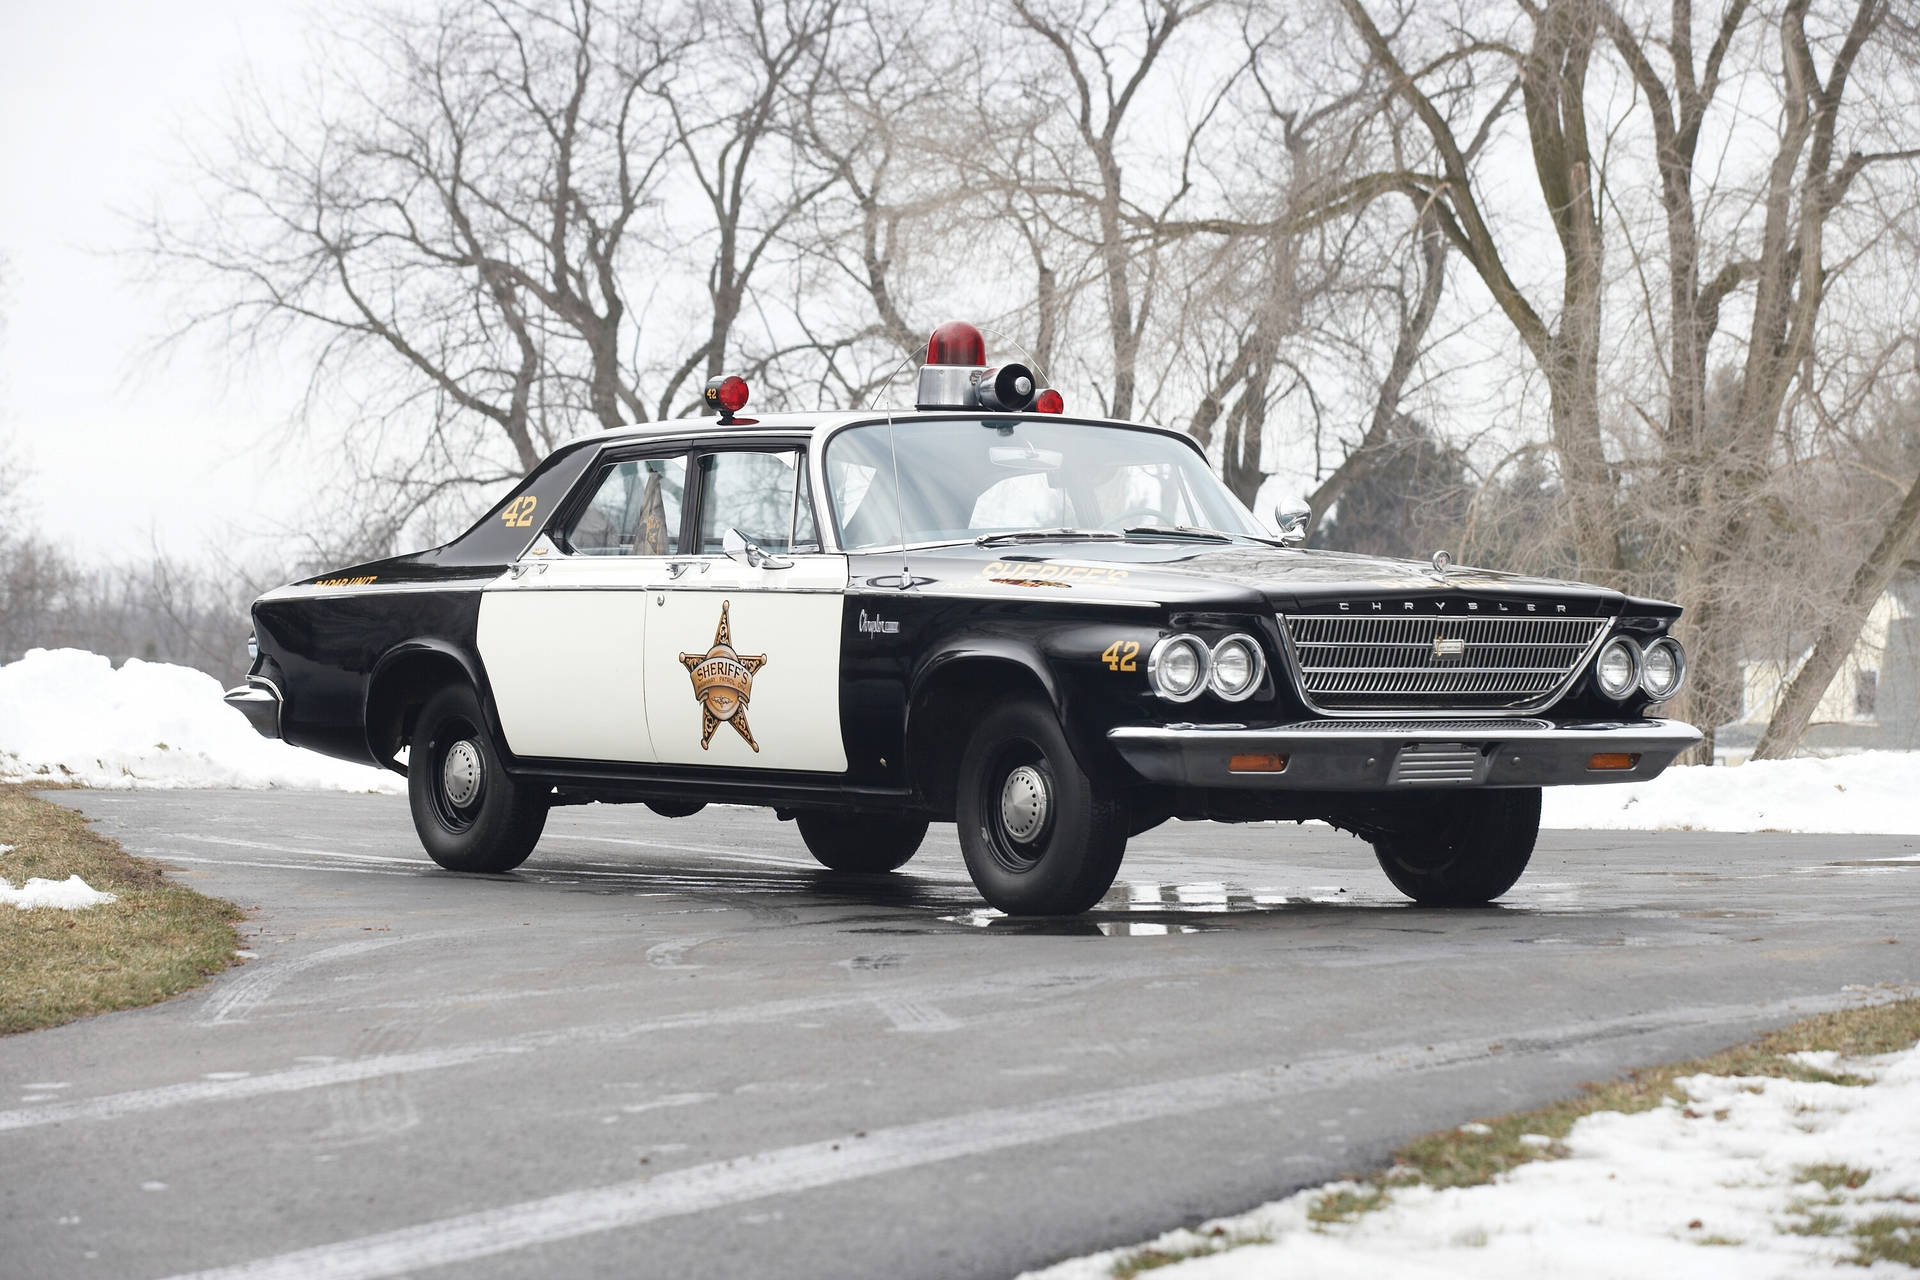 Official Chrysler Sheriff Patrol Car Wallpaper